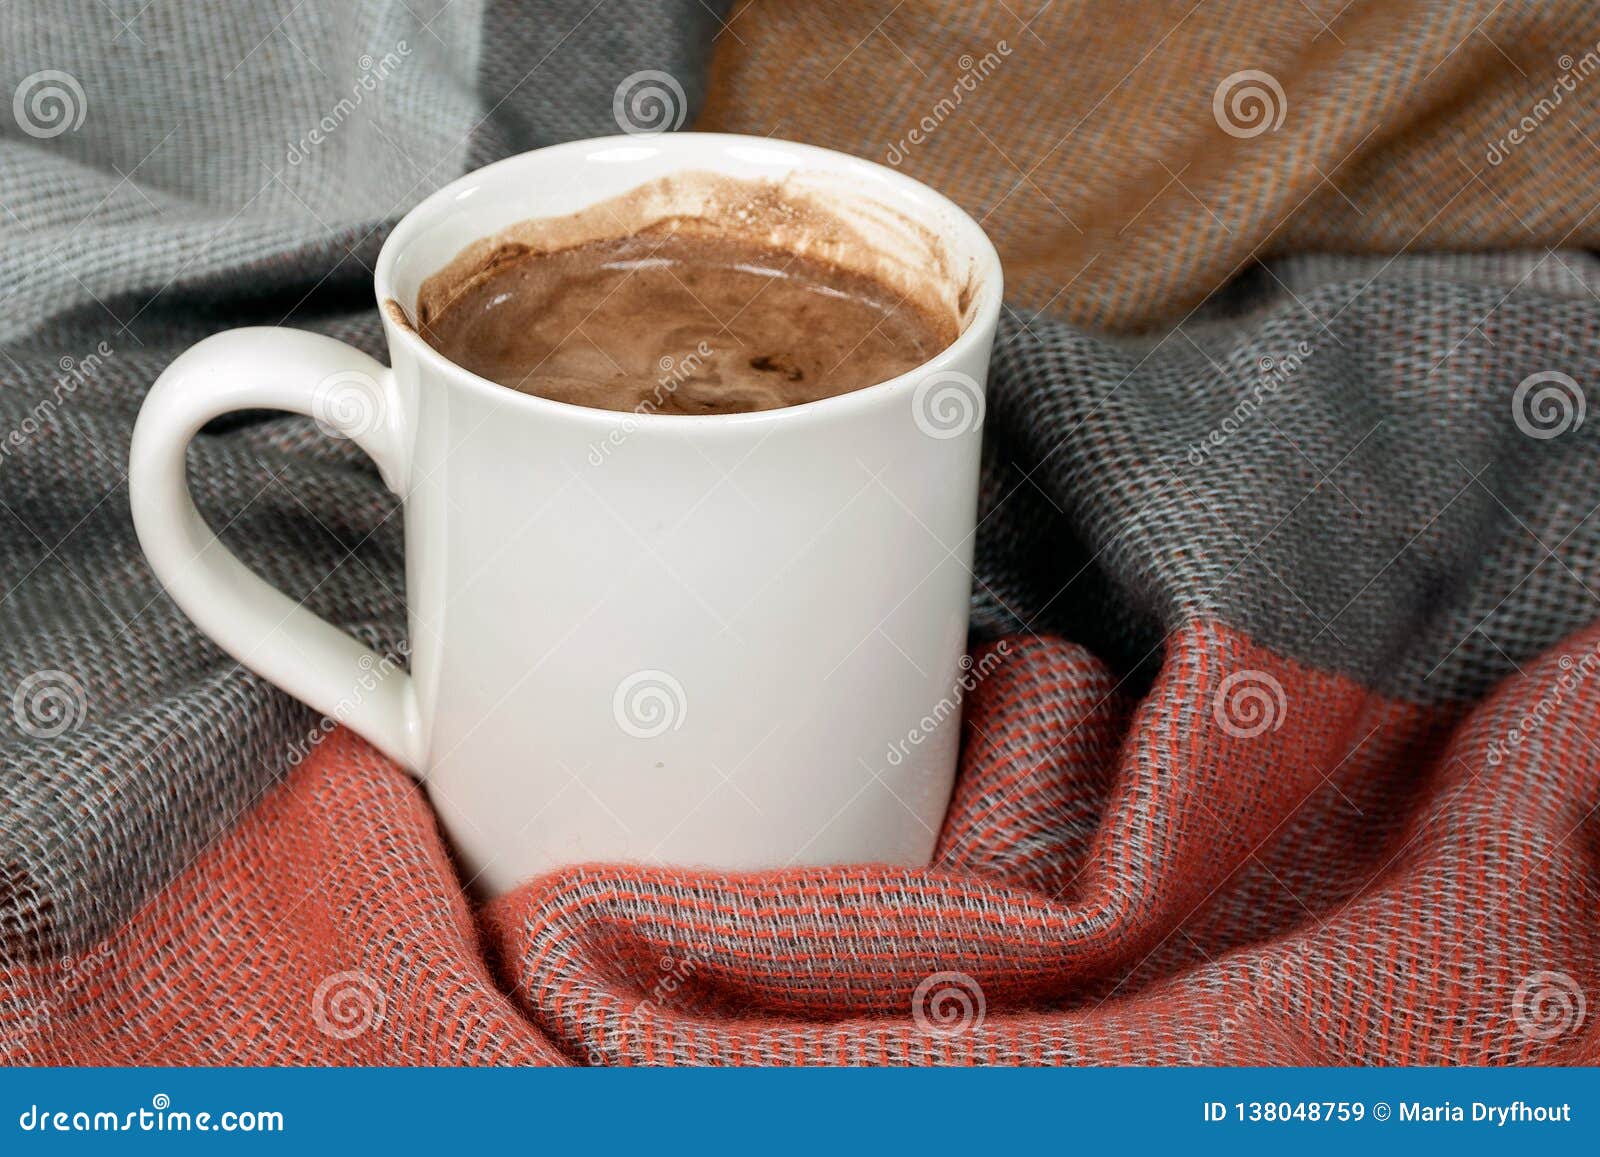 hot-cocoa-mug-blanket-close-up-chocolate-drink-white-warm-soft-138048759.jpg